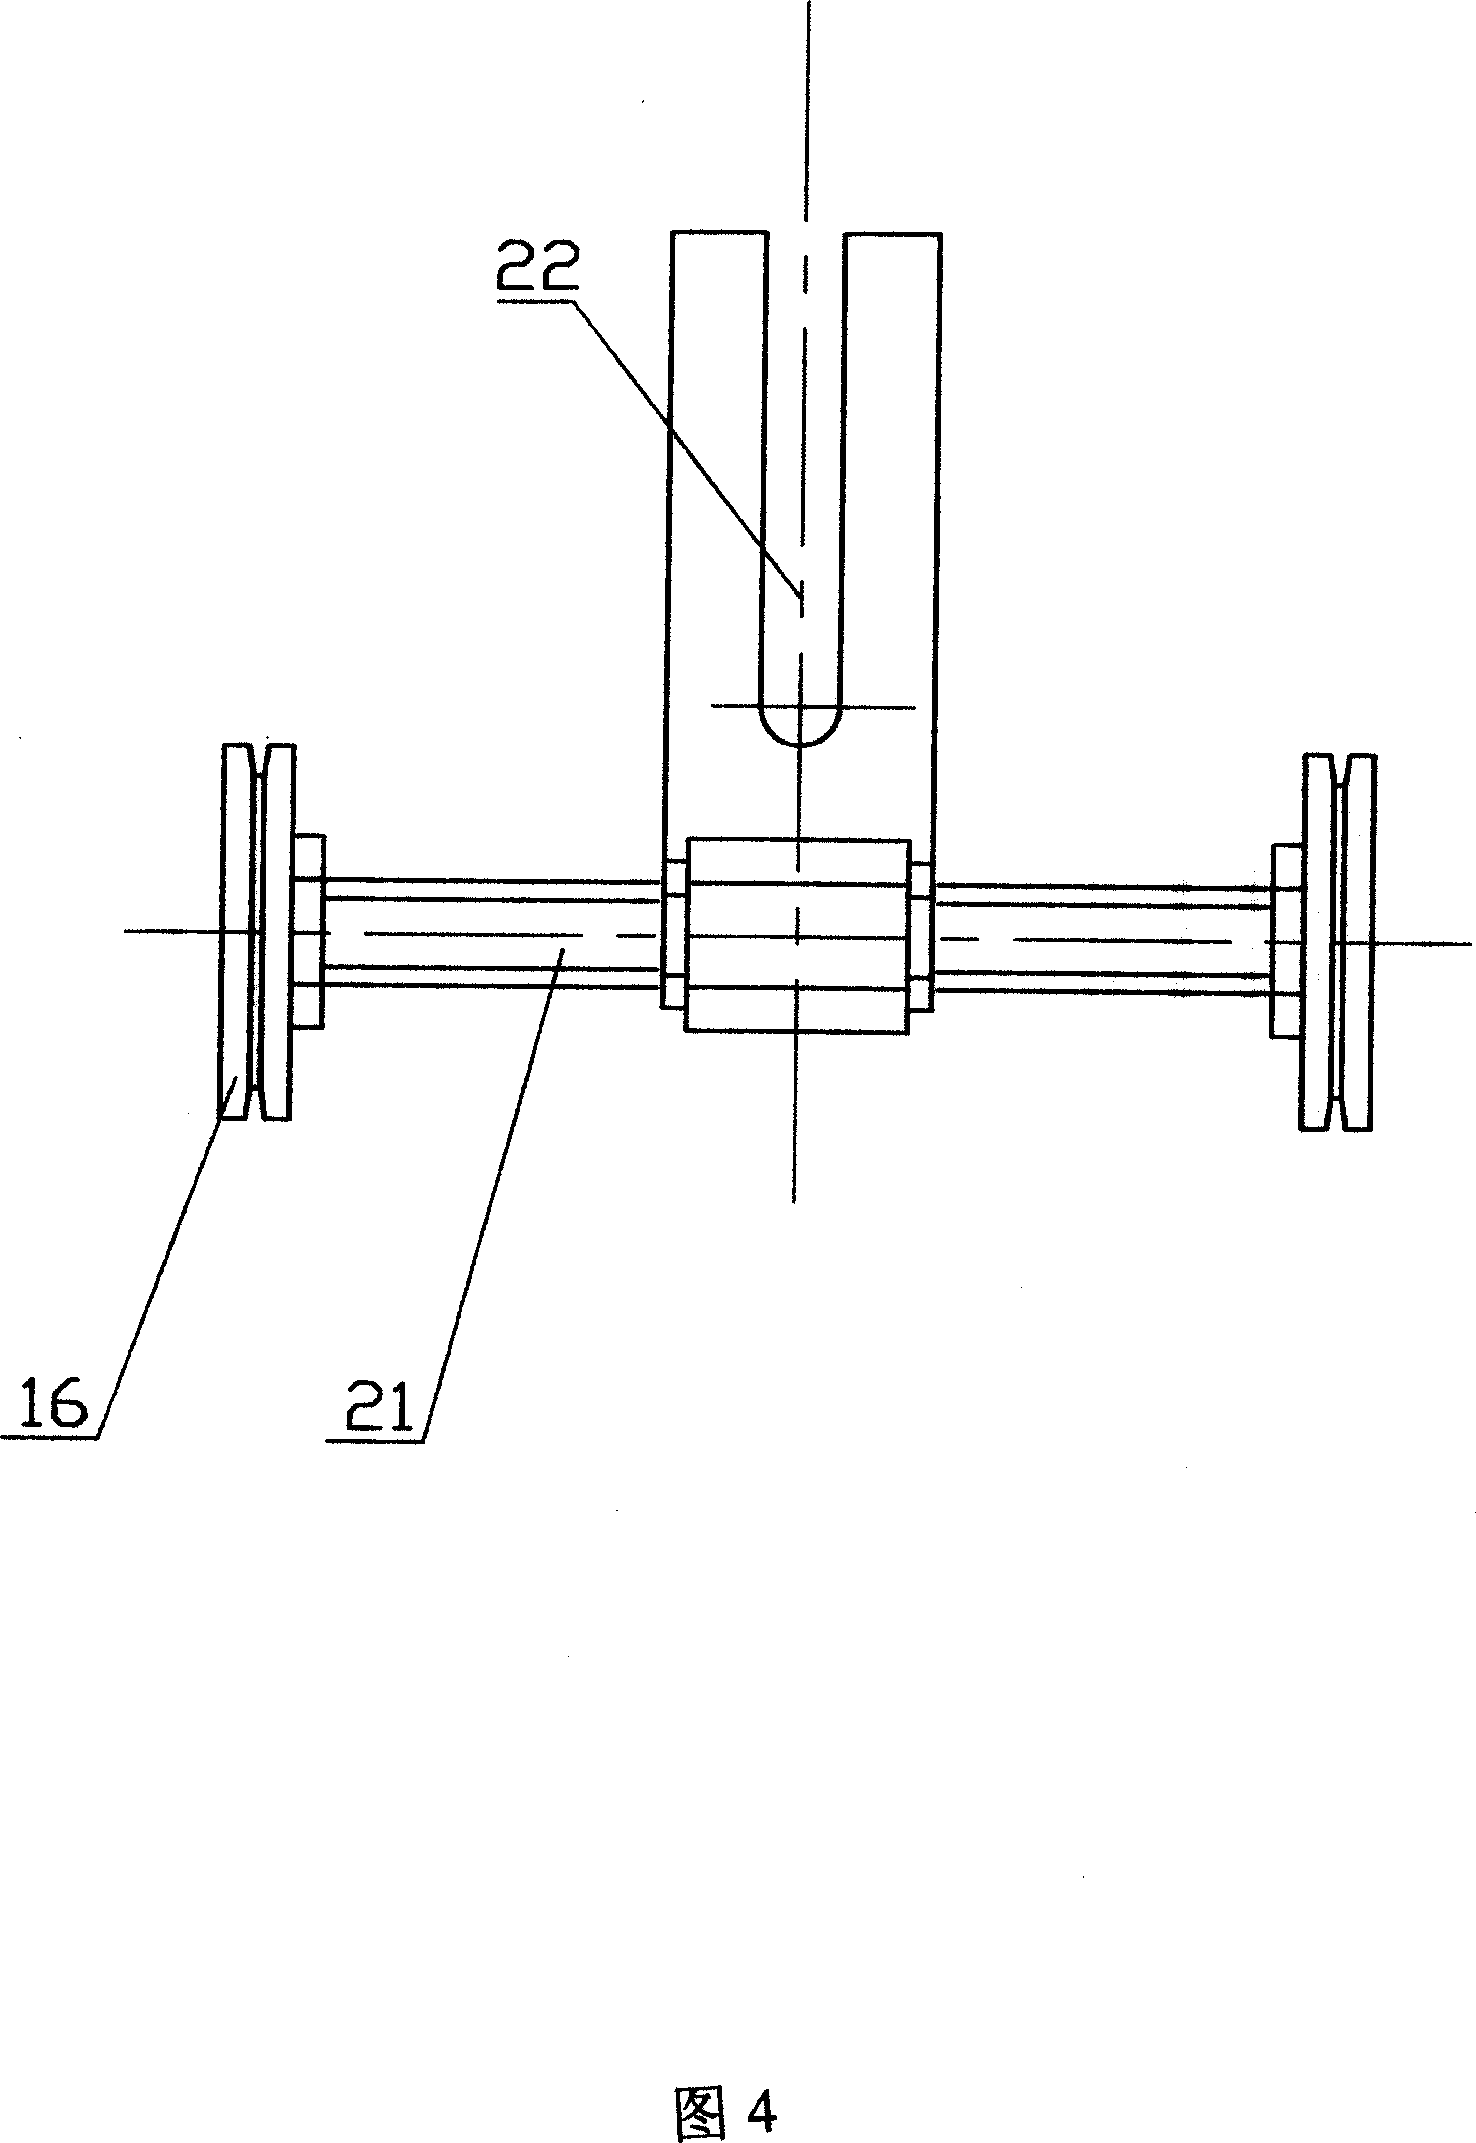 Production method of chromatic metallic yarn and spinning apparatus